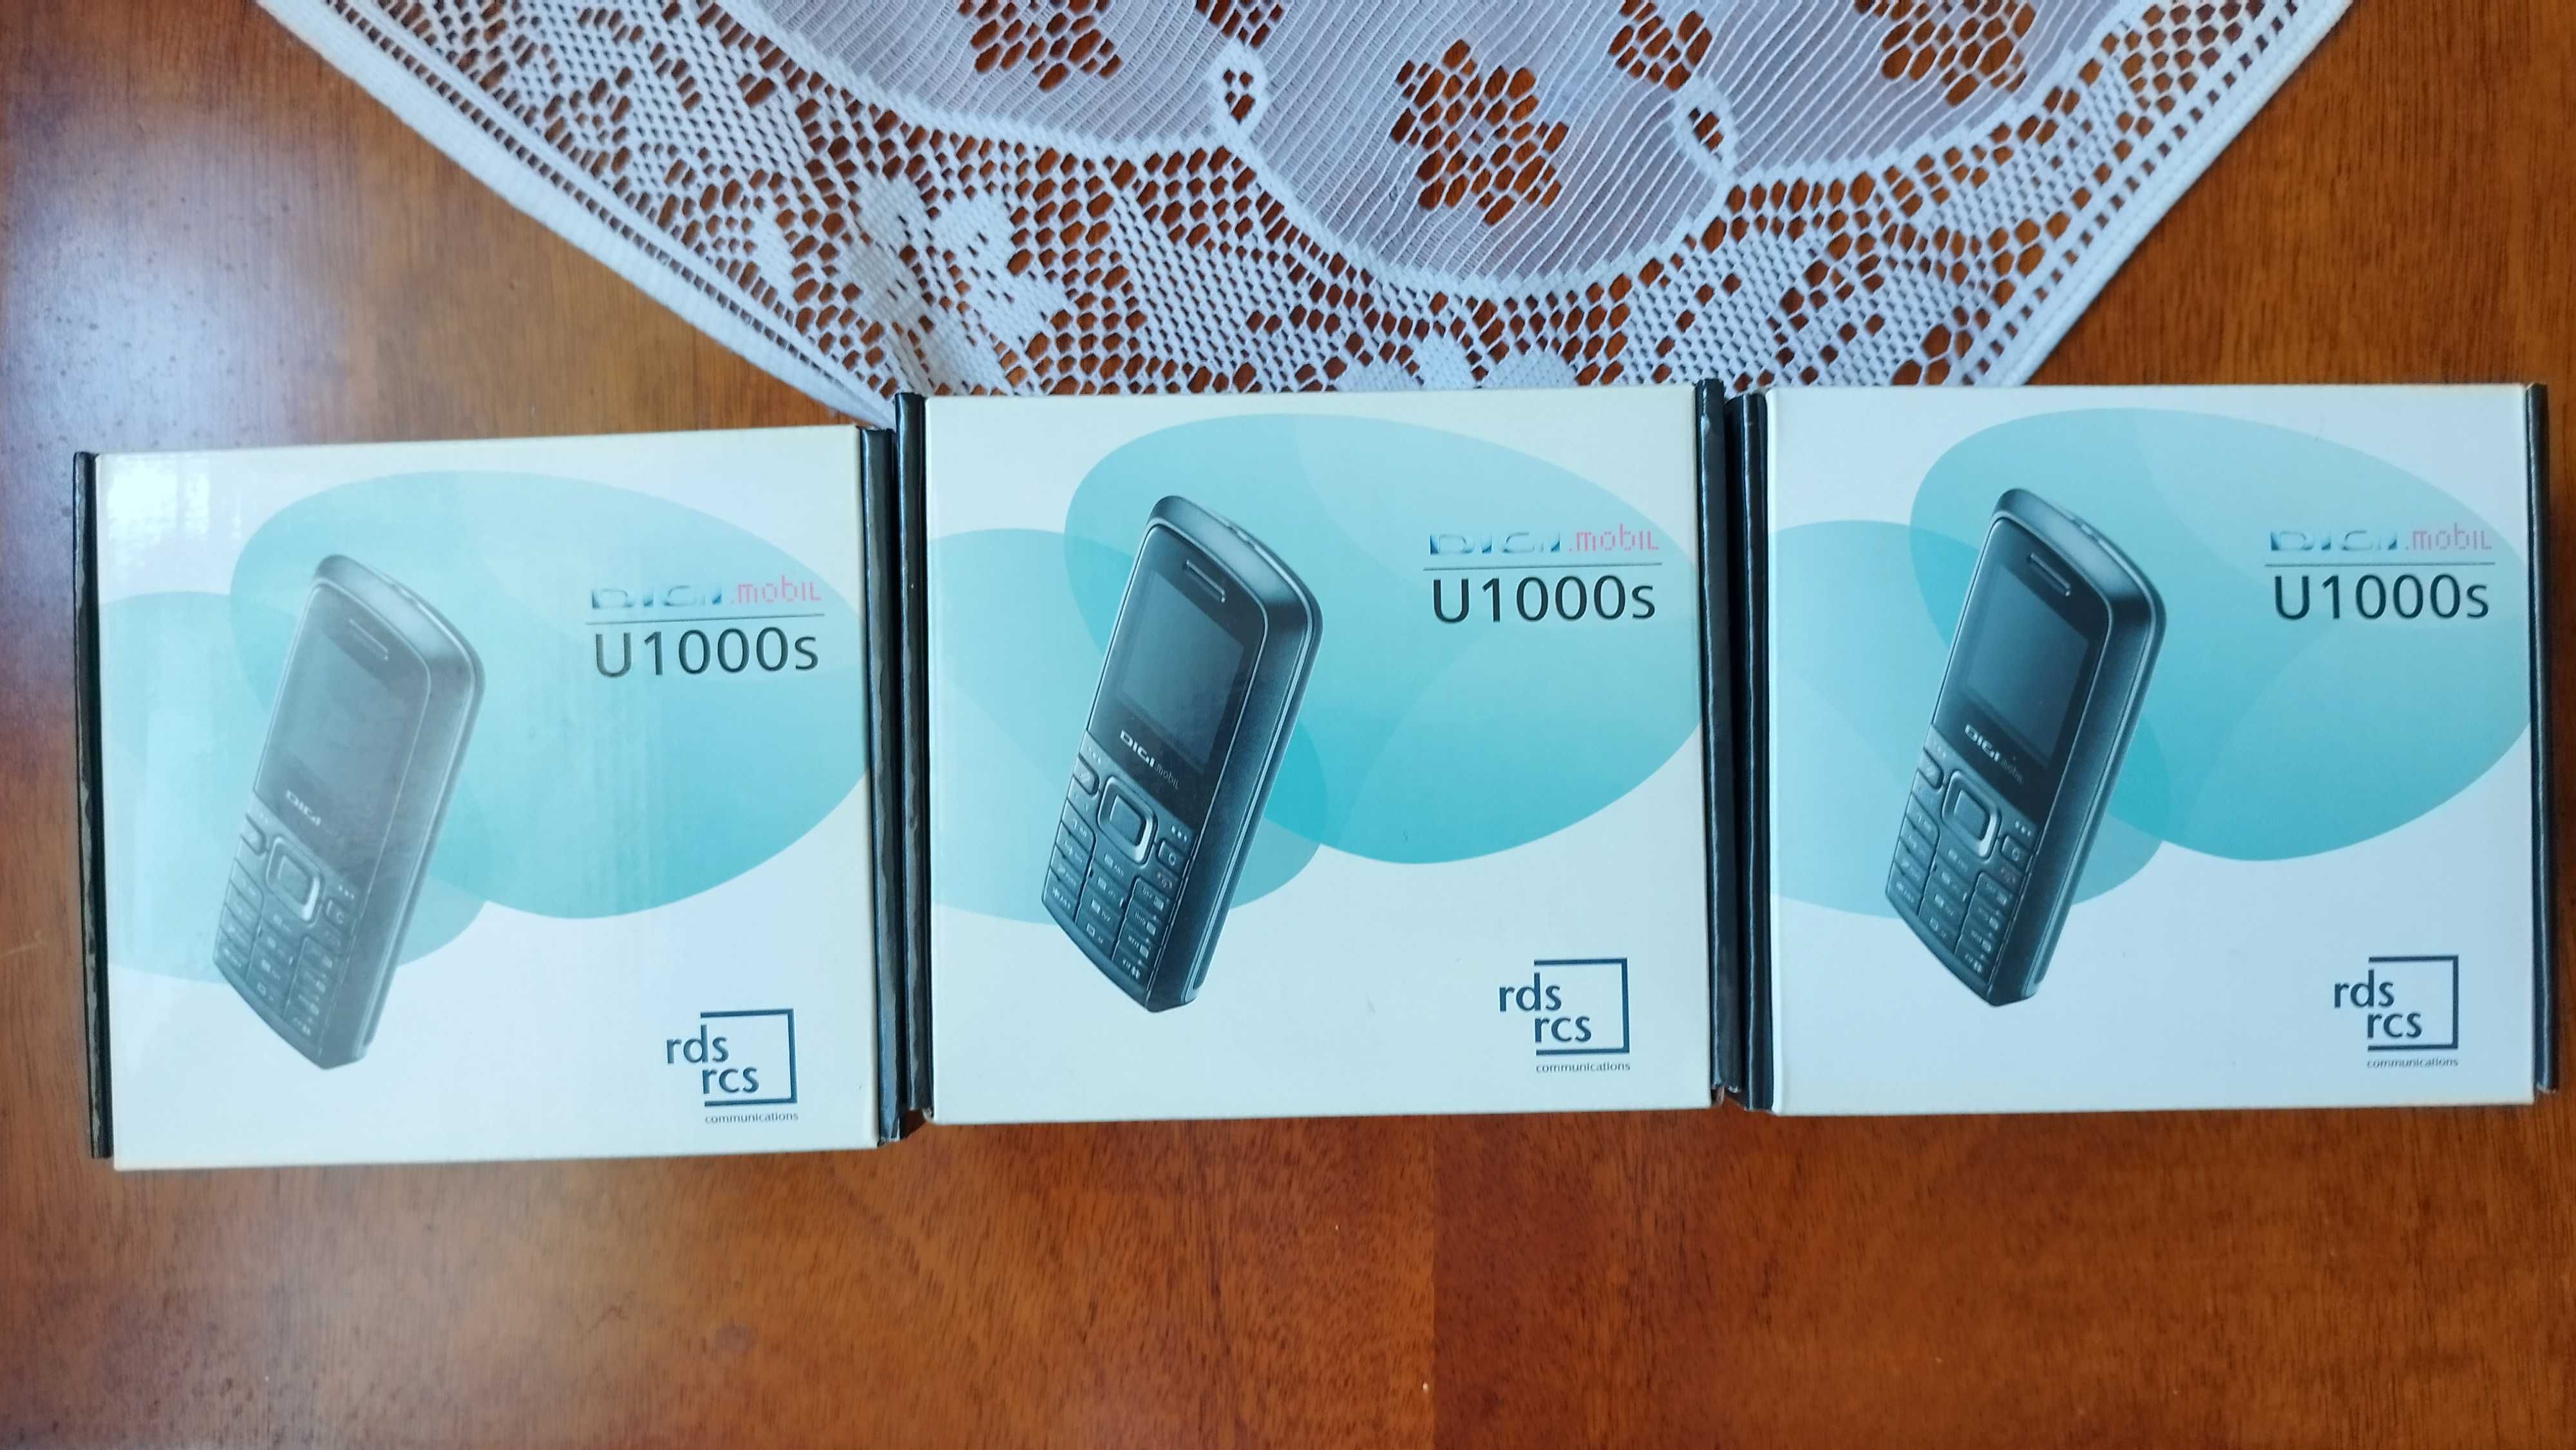 Patru telefoane pentru seniori Digimobil U1000s